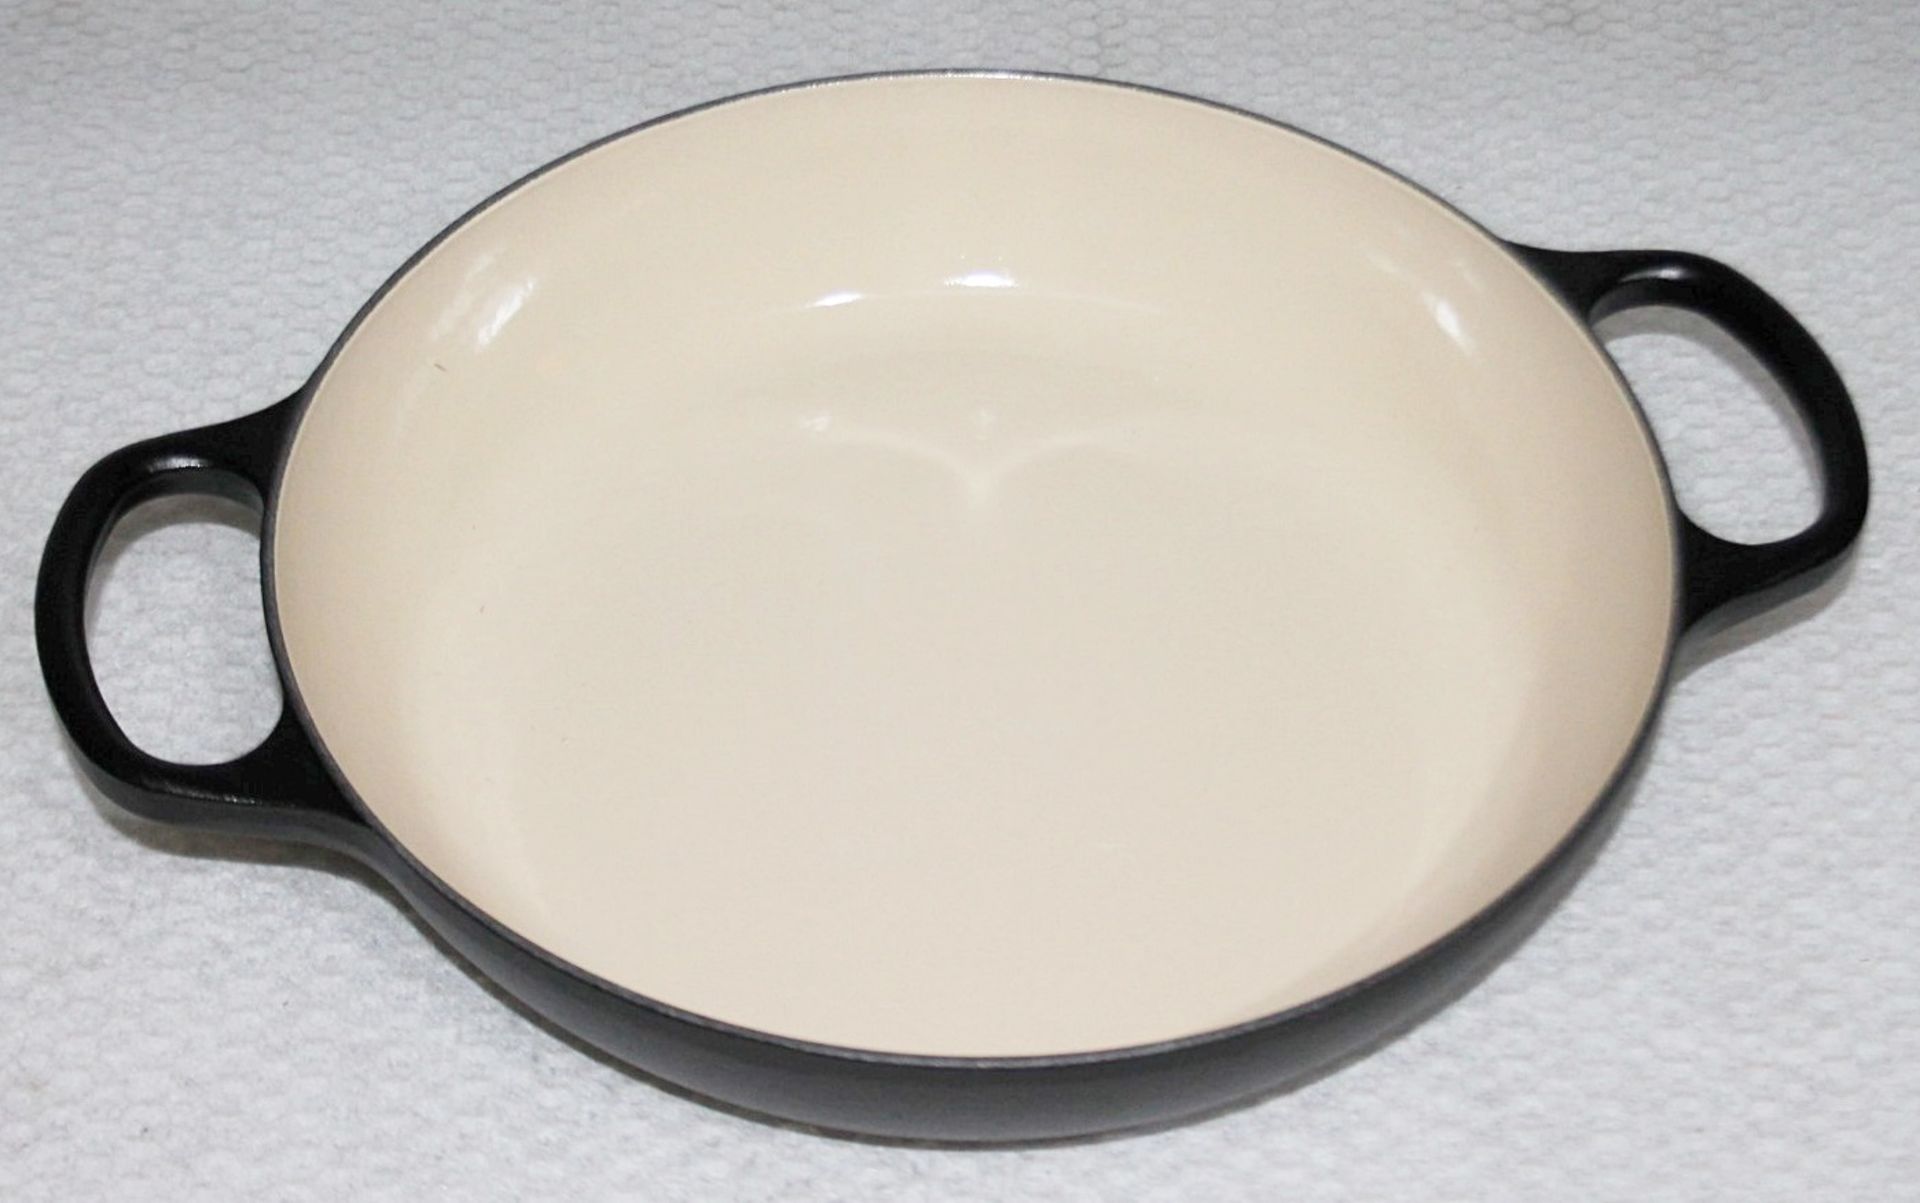 1 x LE CREUSET Signature Cast Iron Round Shallow Casserole Dish With Lid In Matt Black (30cm) - Image 3 of 8